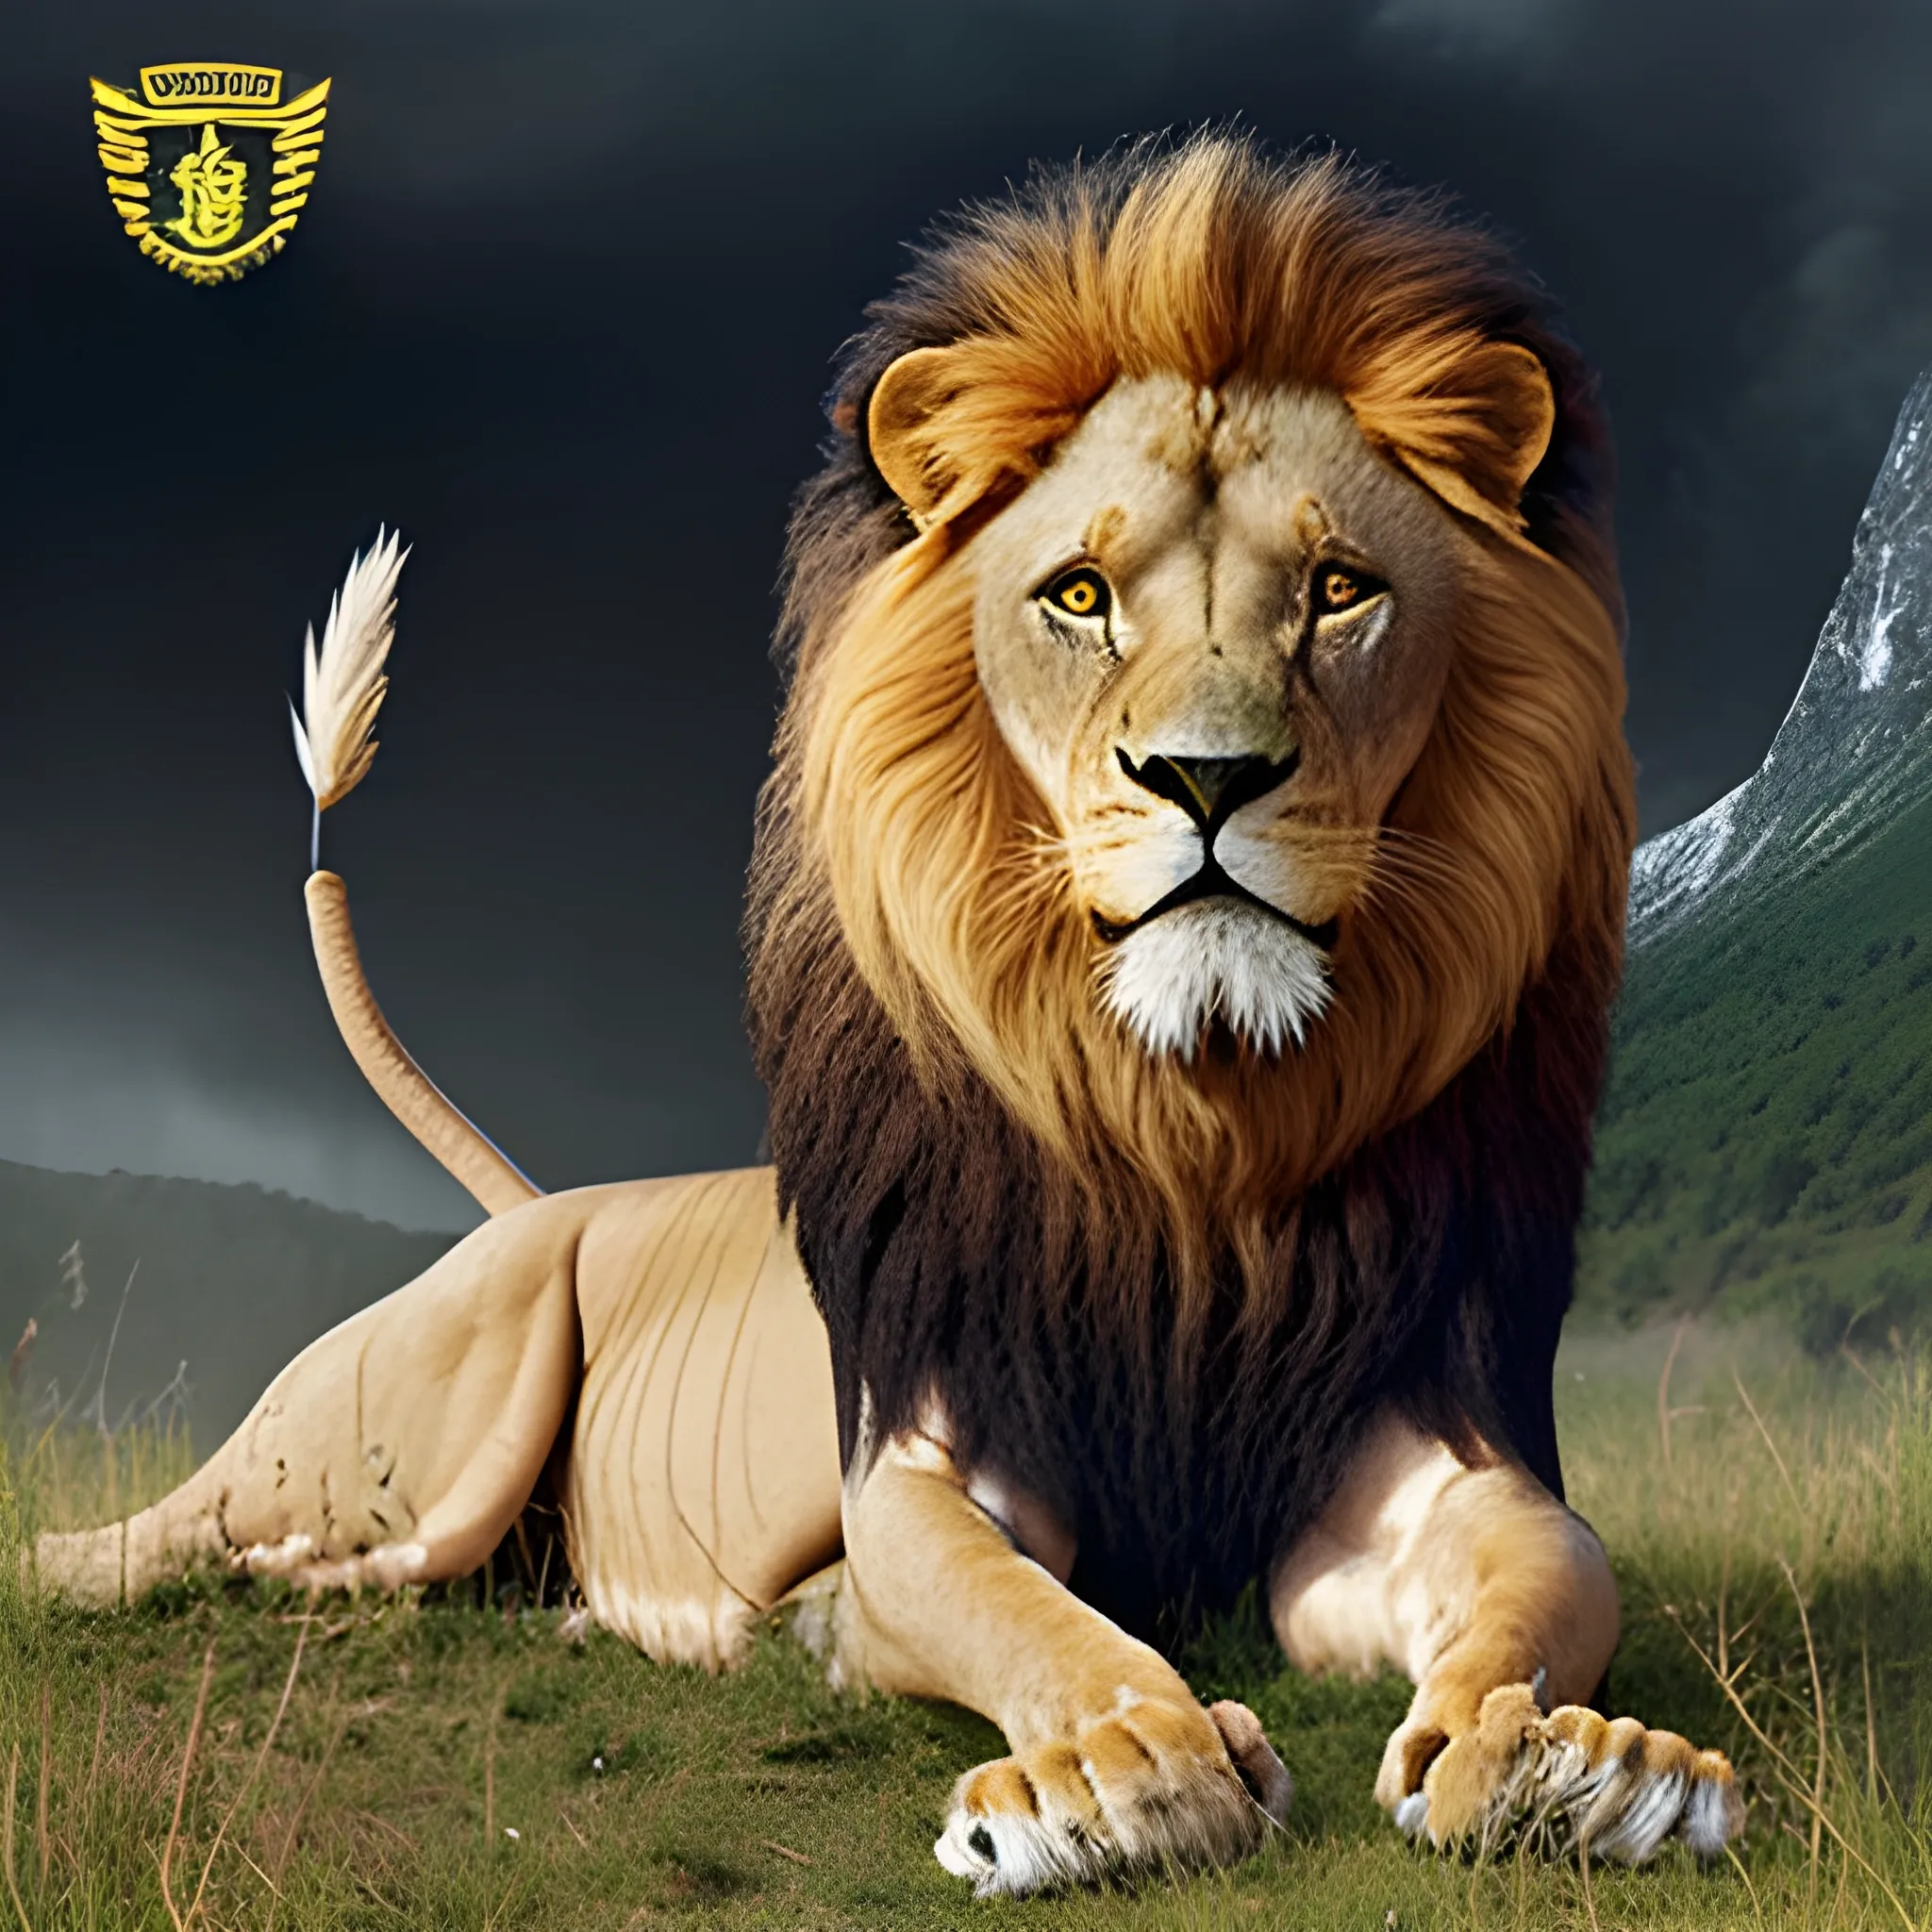 Strong lion, wordwar, army, dangerous 